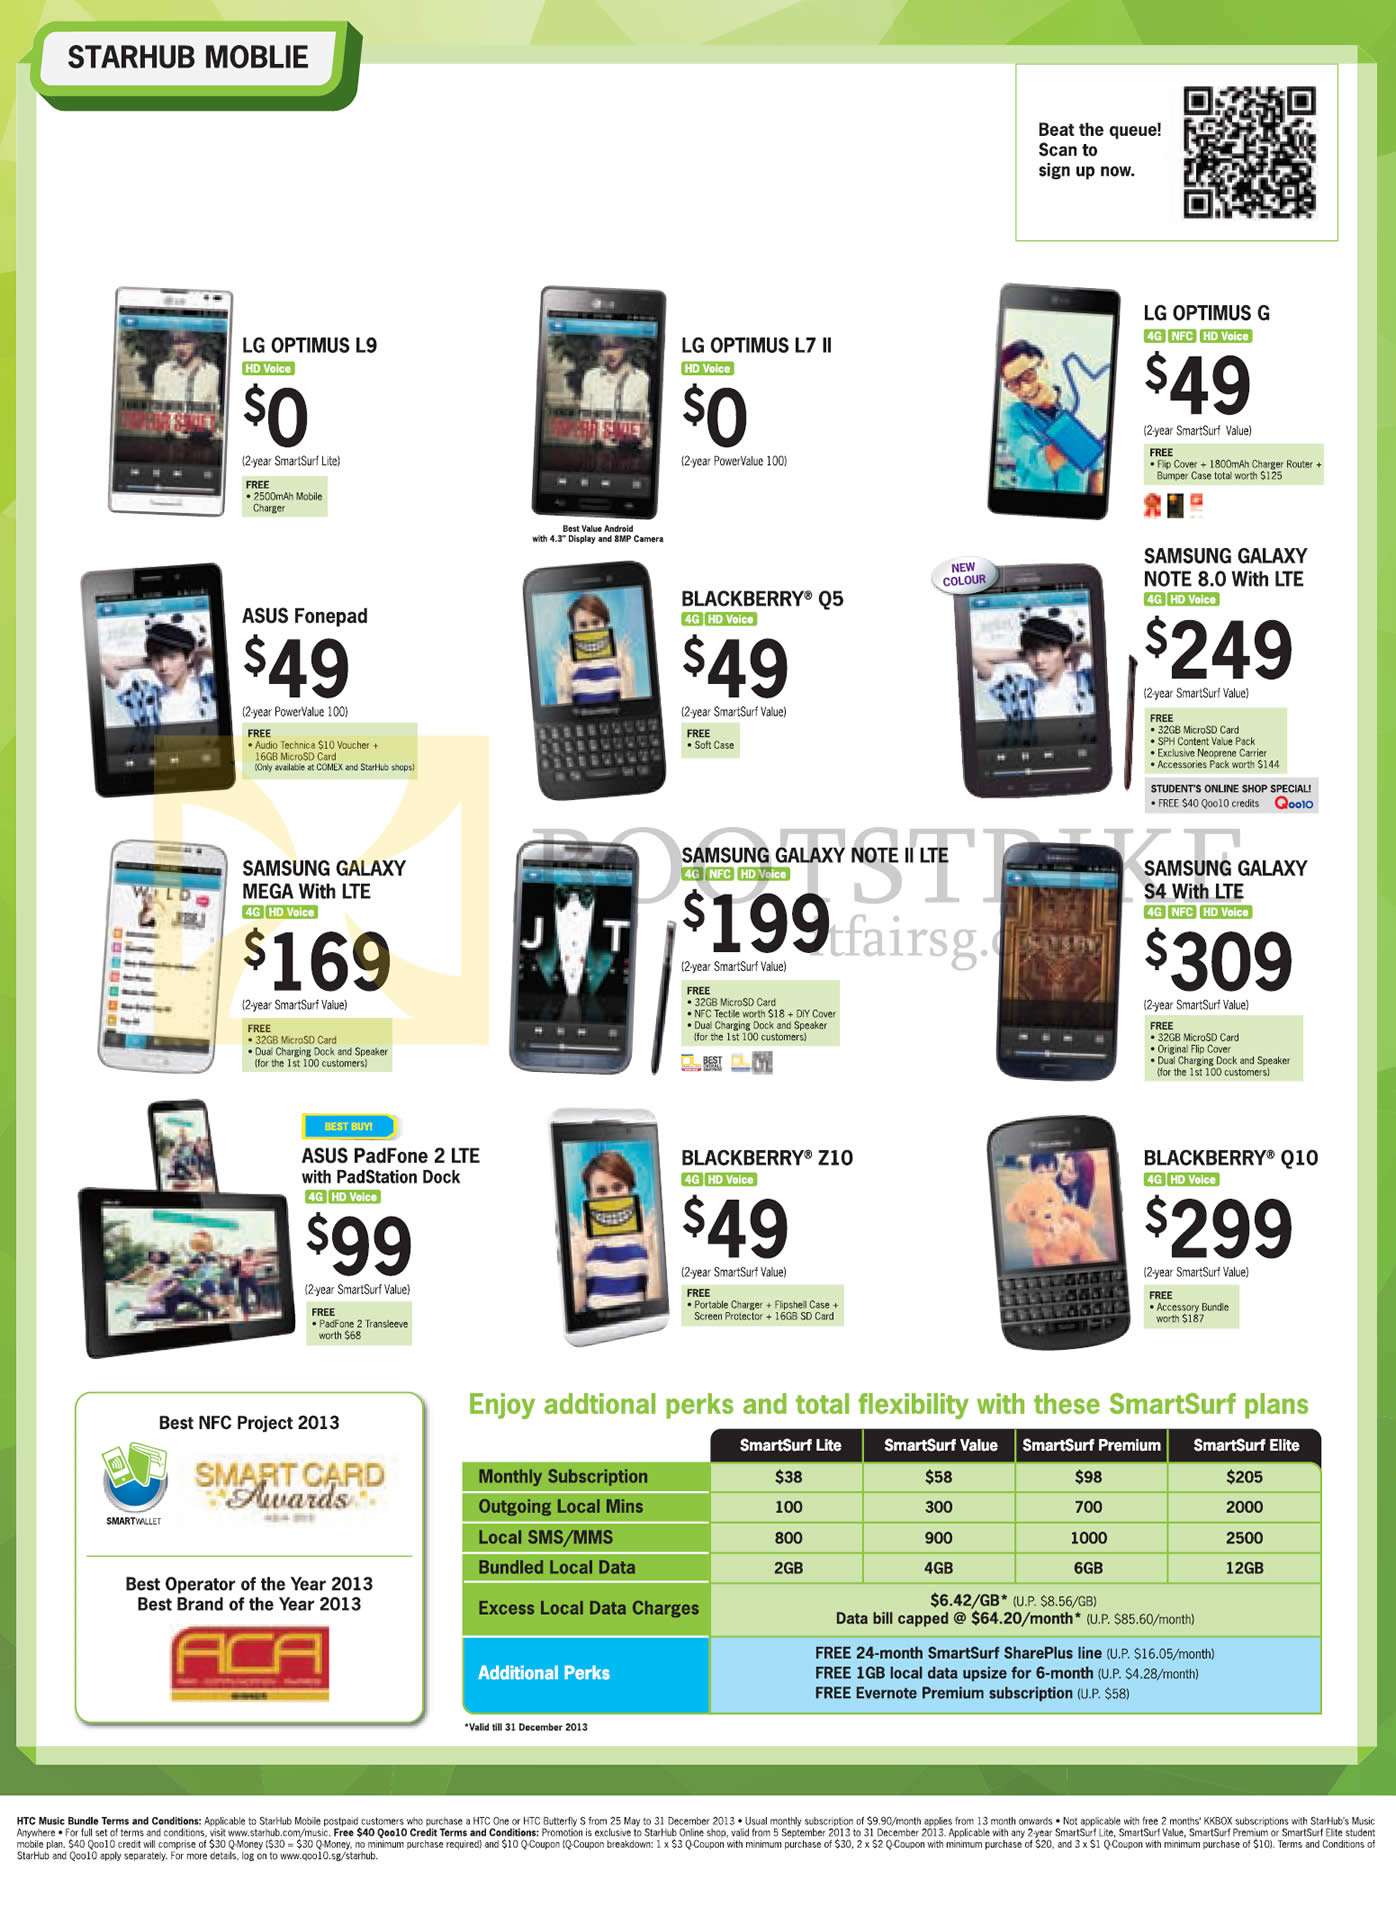 COMEX 2013 price list image brochure of Starhub Mobile LG Optimus L9, L7 II, G, ASUS Fonepad, Blackberry Q5, Samsung Galaxy Note 8.0, Mega, Note II LTE, S4, ASUS Padfone 2, Blackberry Z10, Q10